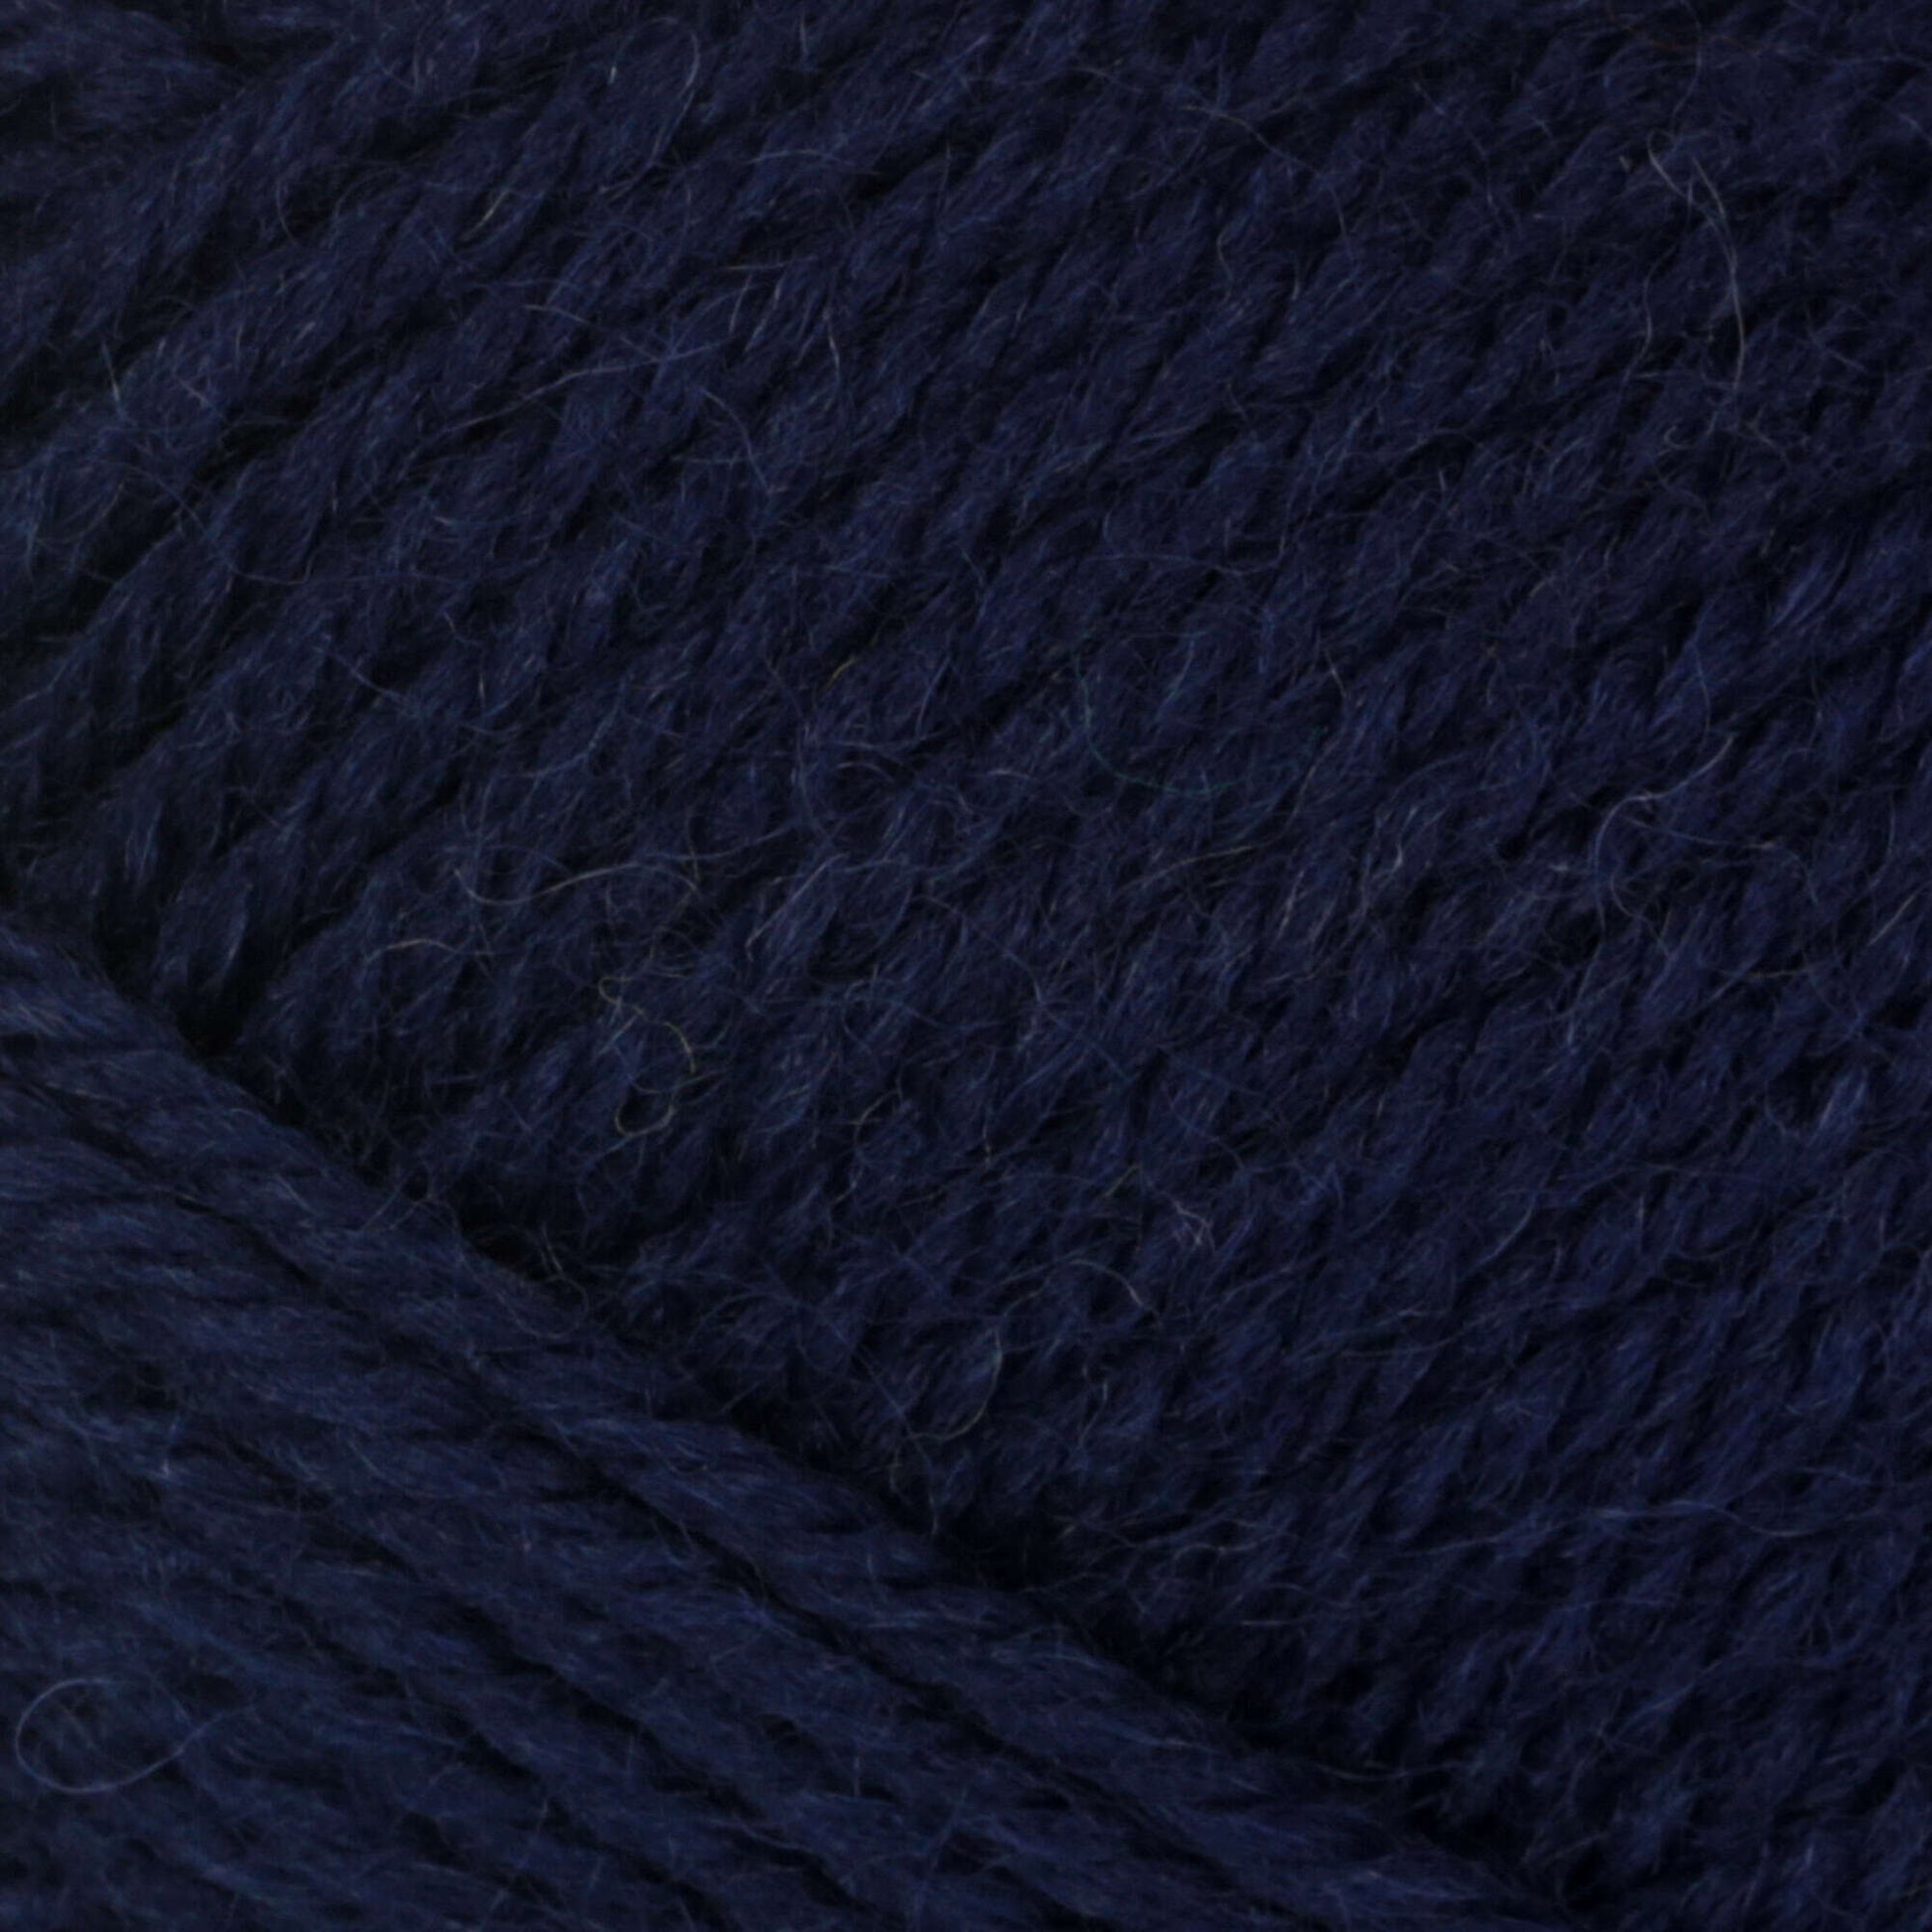 Patons Classic Wool DK Superwash Yarn - Discontinued Shades Navy